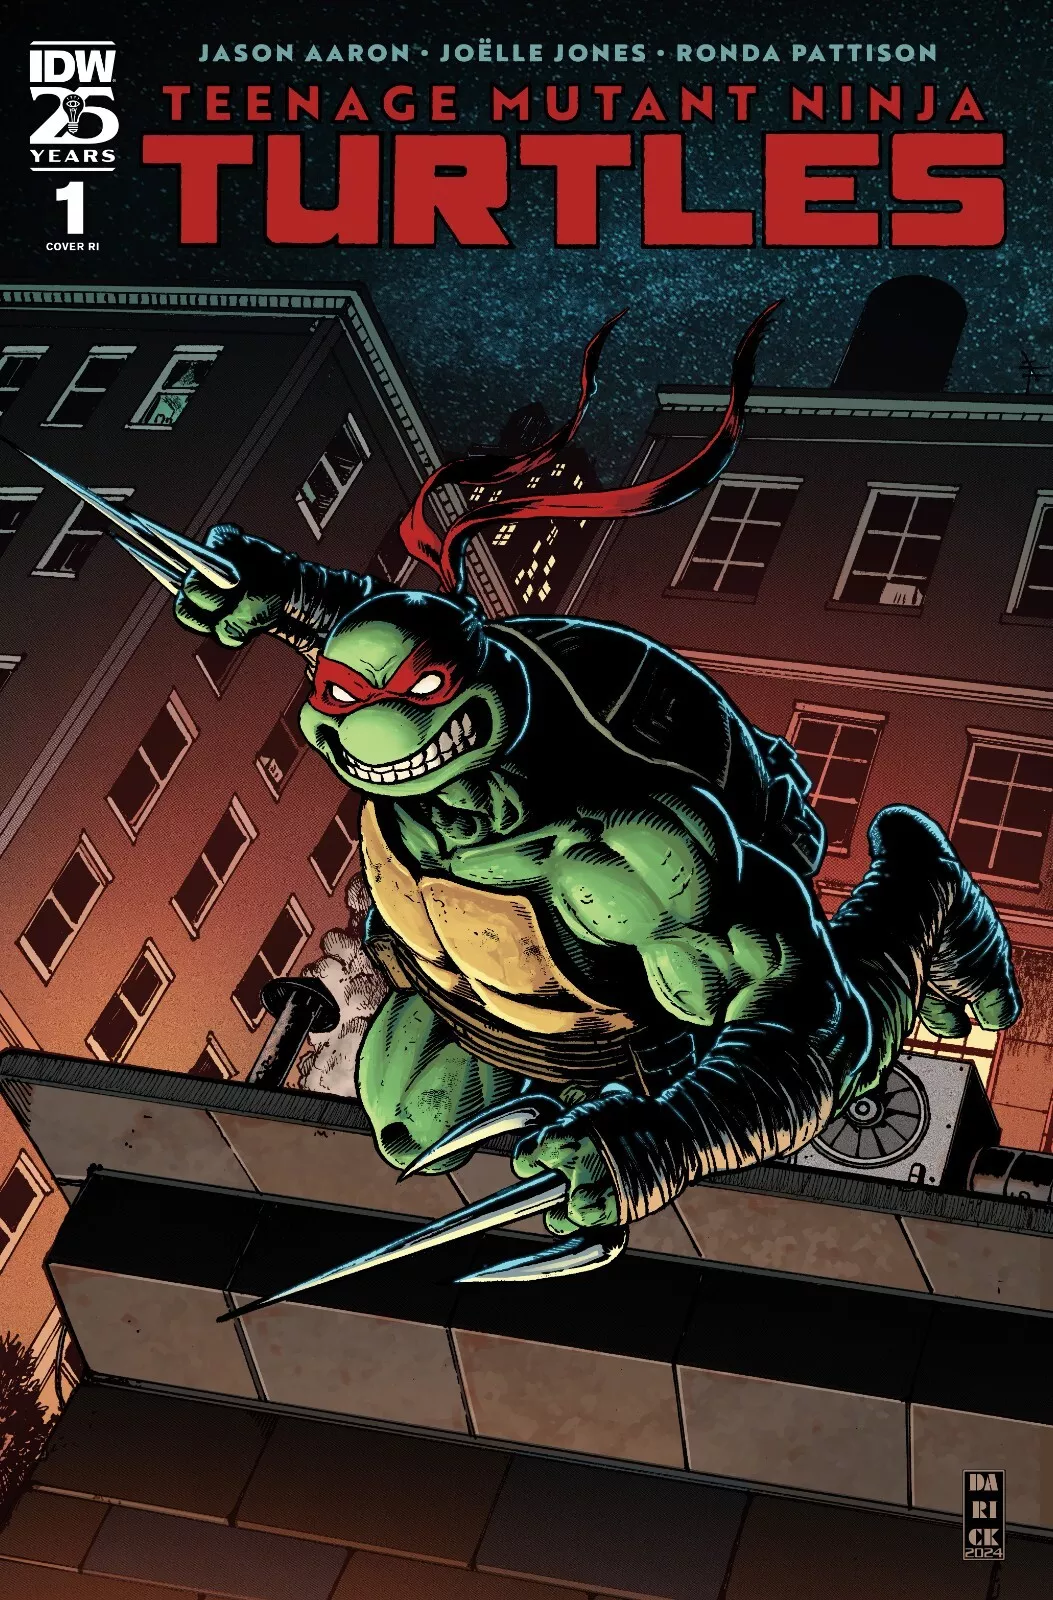 Teenage Mutant Ninja Turtles #1 Aaron Bartling Exclusive [Ltd to 1200] RATIO PACK #2 (1:25, 1:50)